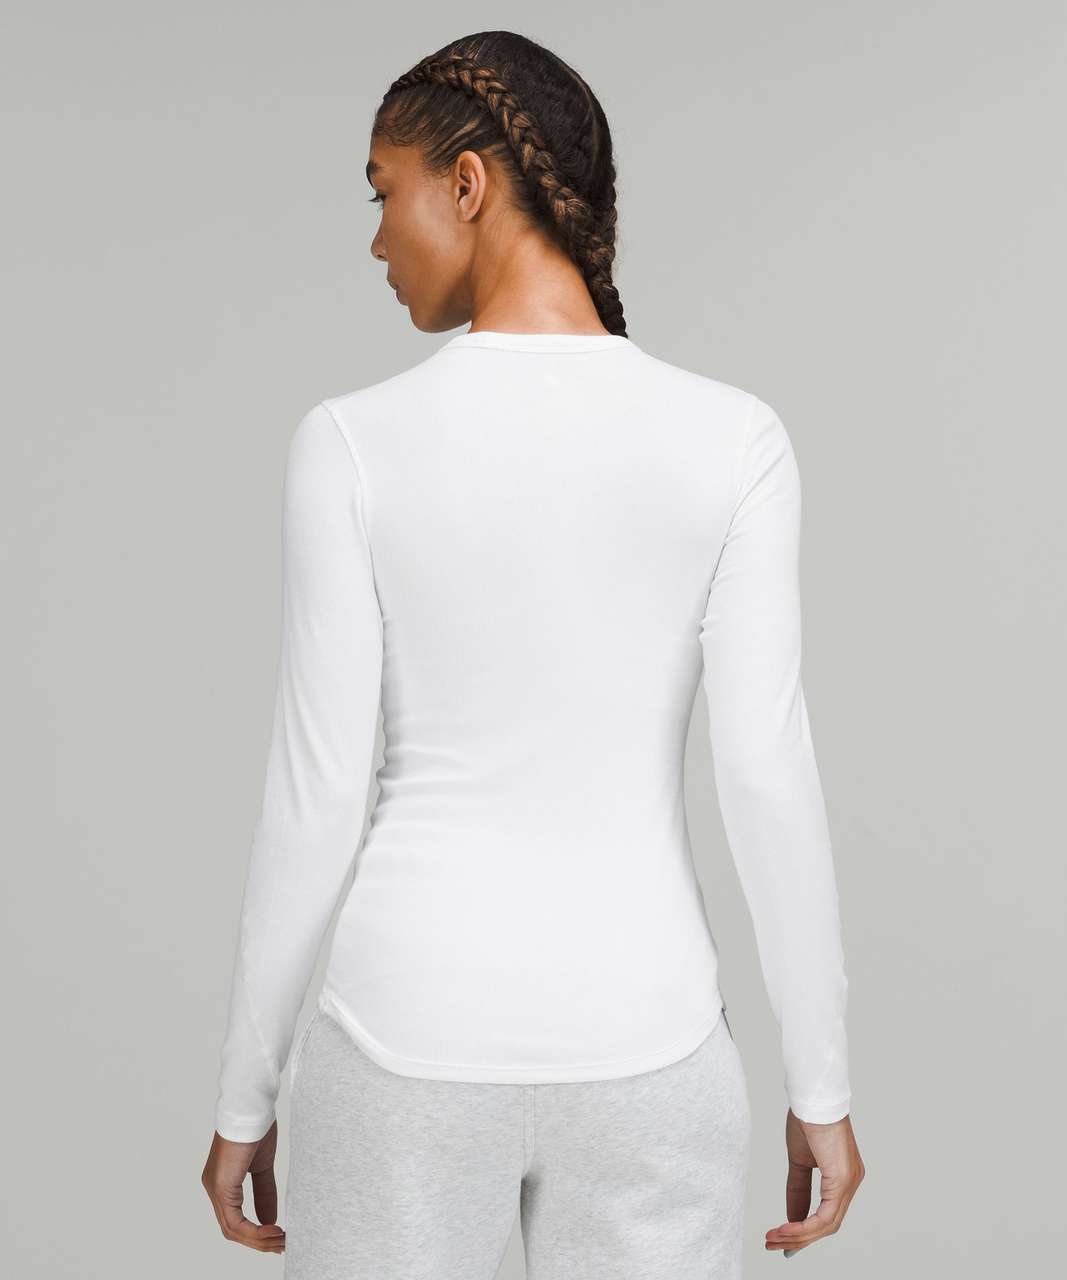 Tight White Long Sleeve Shirt Women's - Mid Length